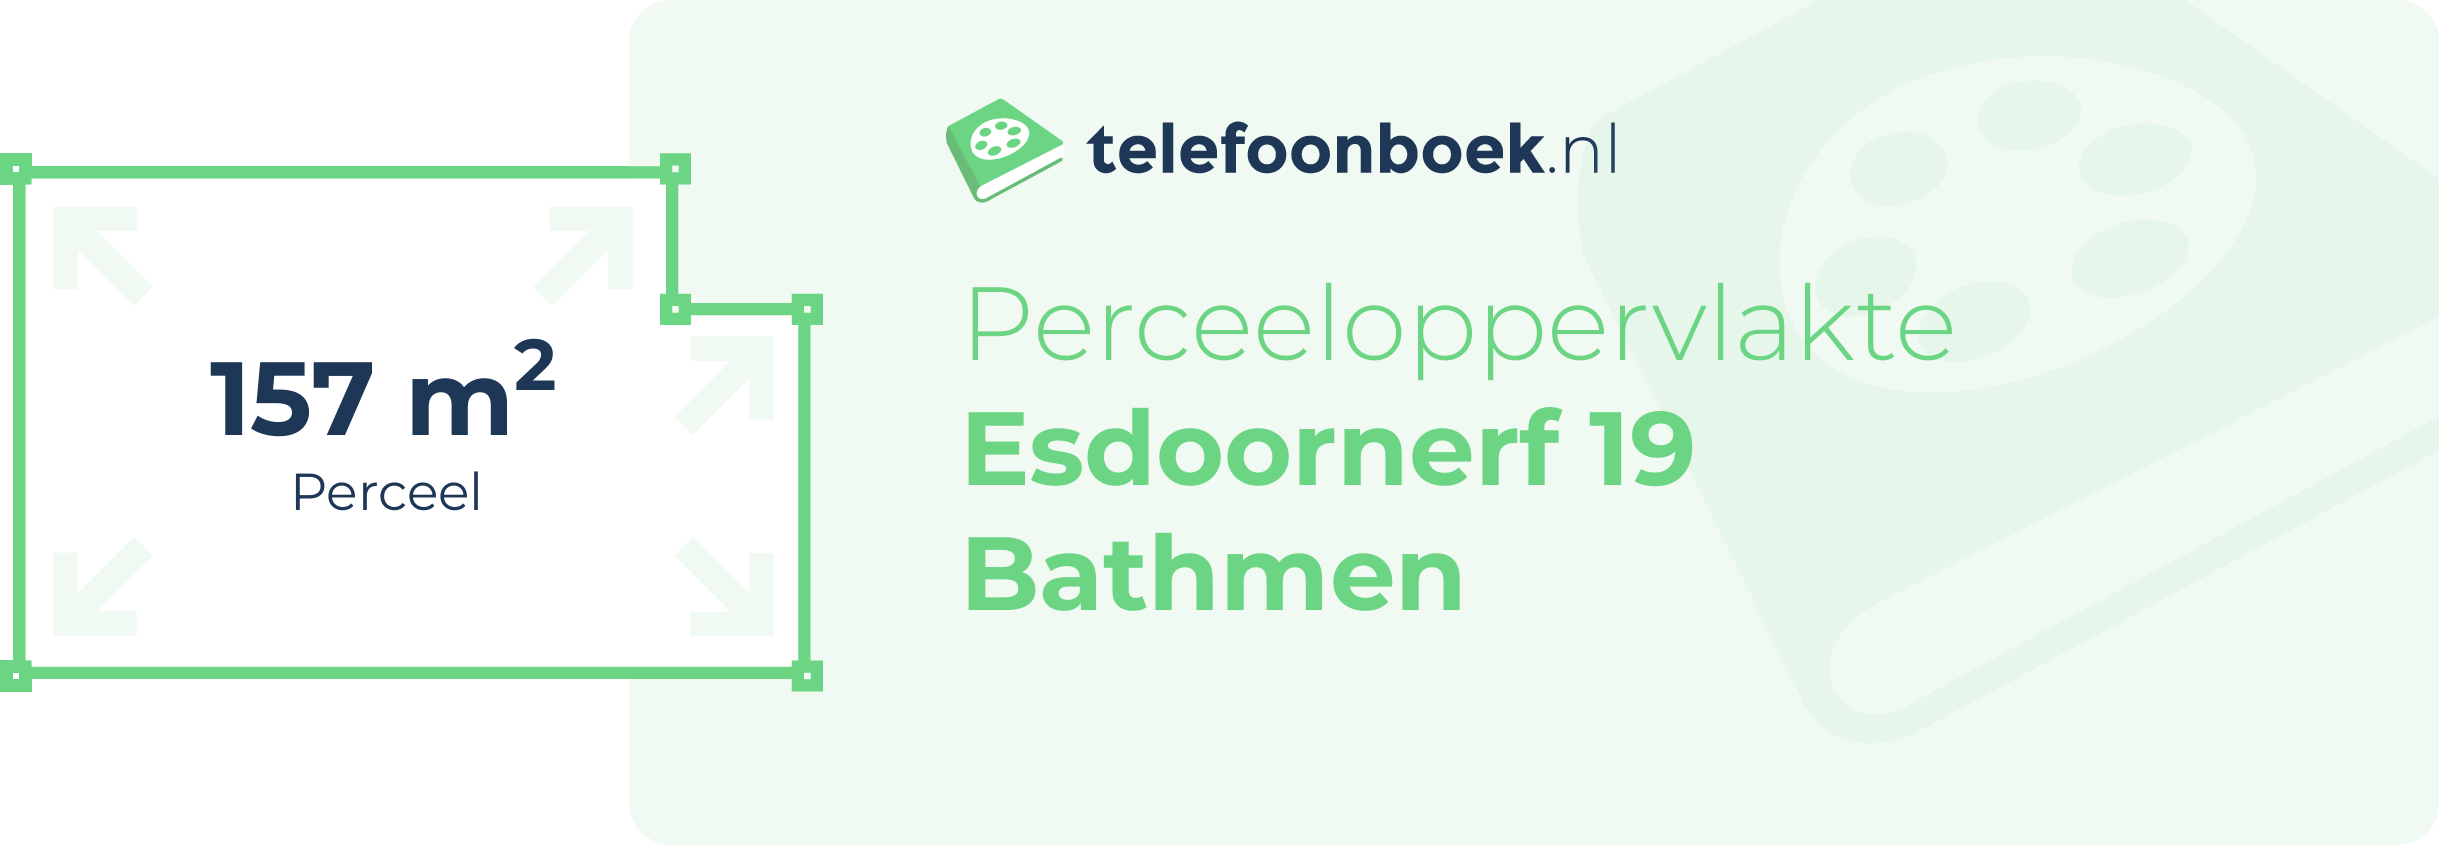 Perceeloppervlakte Esdoornerf 19 Bathmen